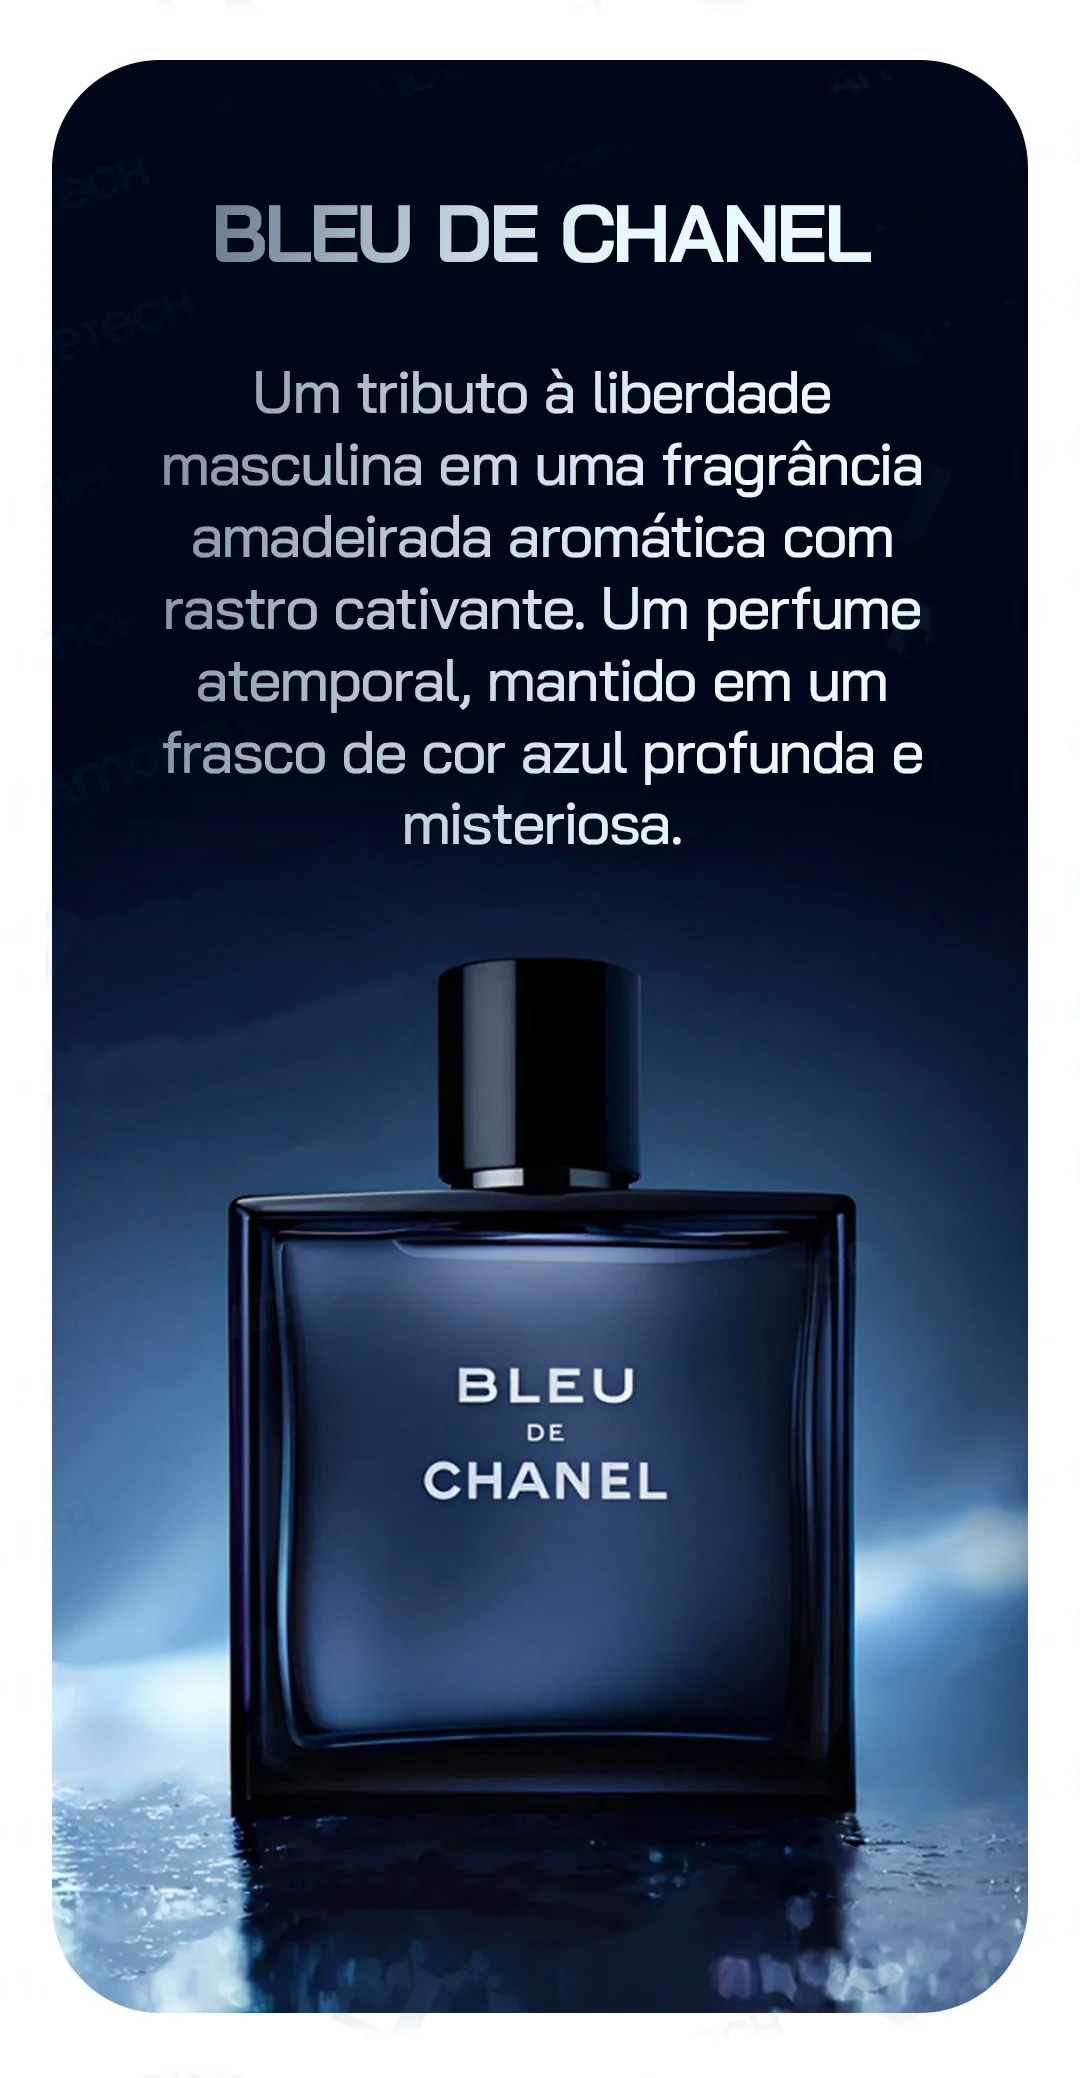 QUEIMA DE ESTOQUE - 3 Perfumes Masculinos Importados (100ml cada) - Sauvage Dior | Bleu de Chanel | 212 VIP Black